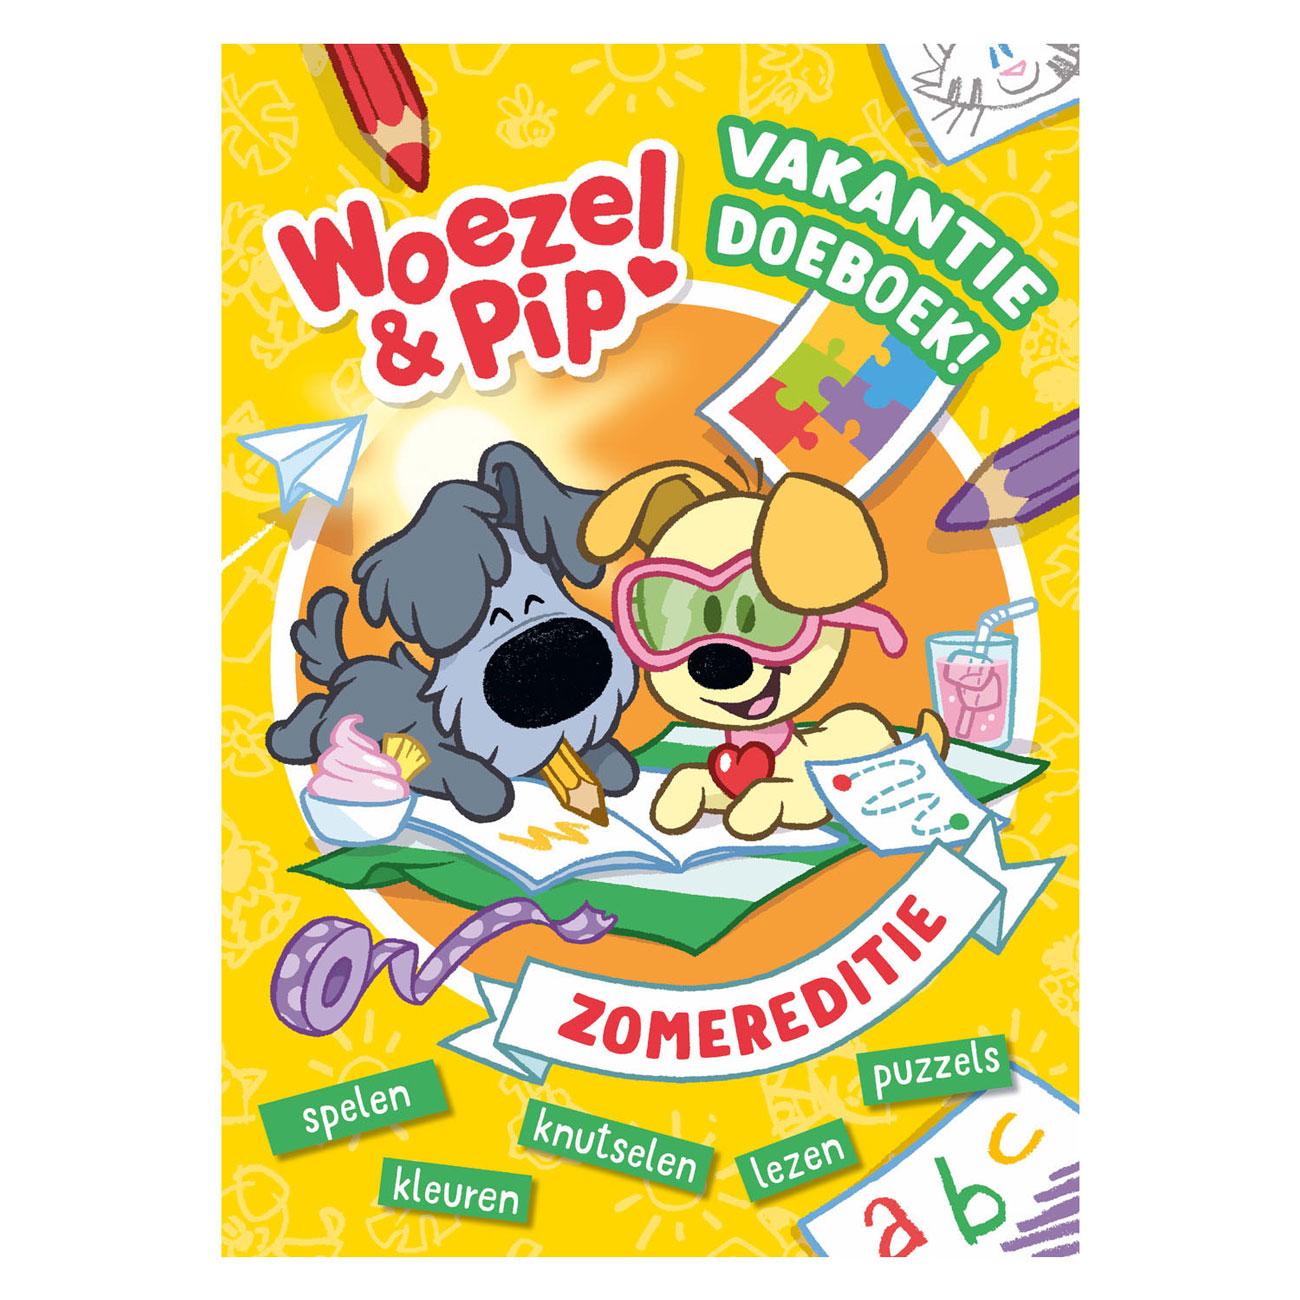 Woezel & Pip - Vacances Doeboek